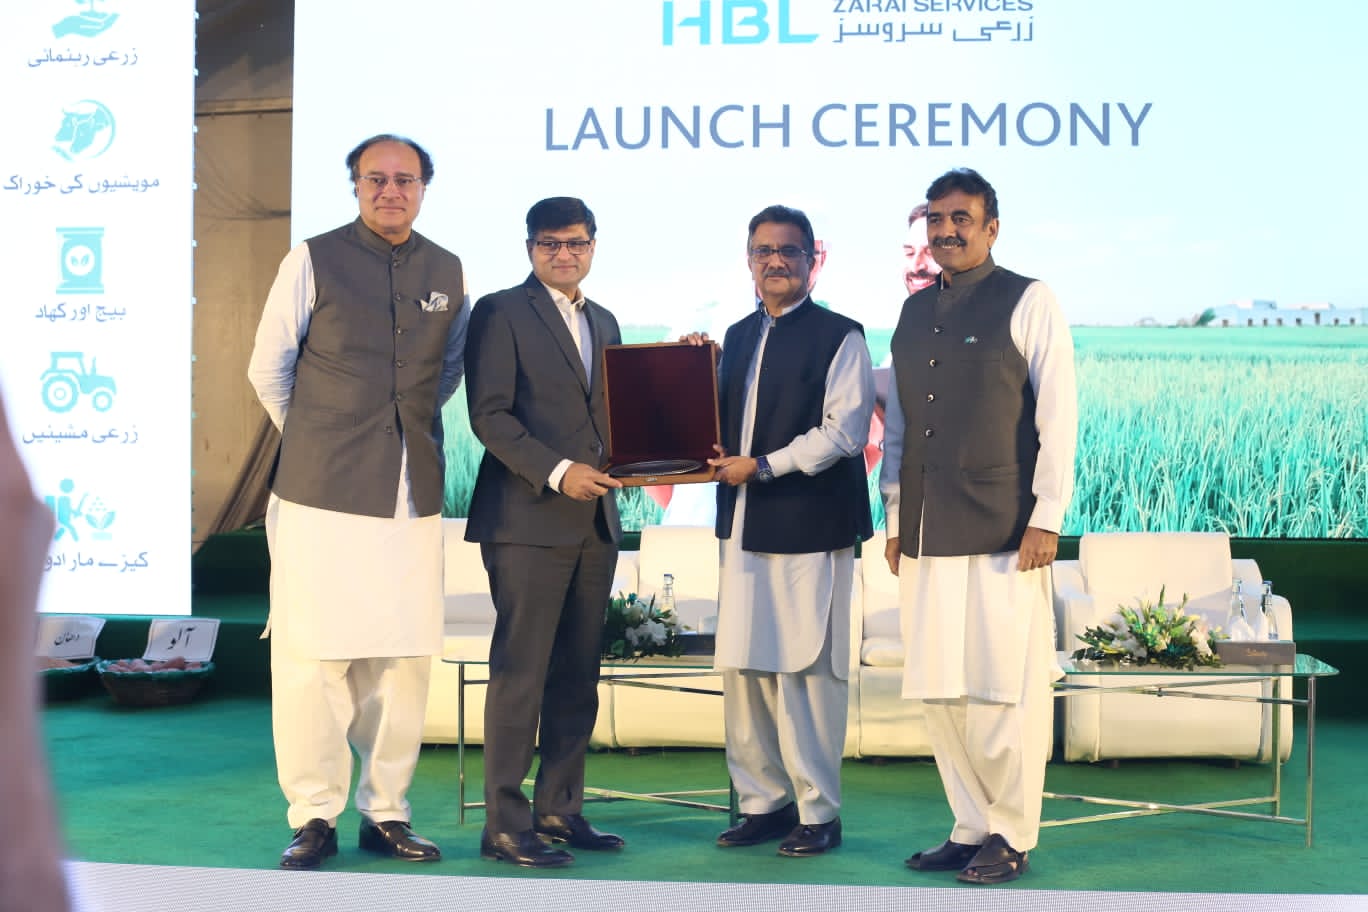 HBL-Zari Services launched